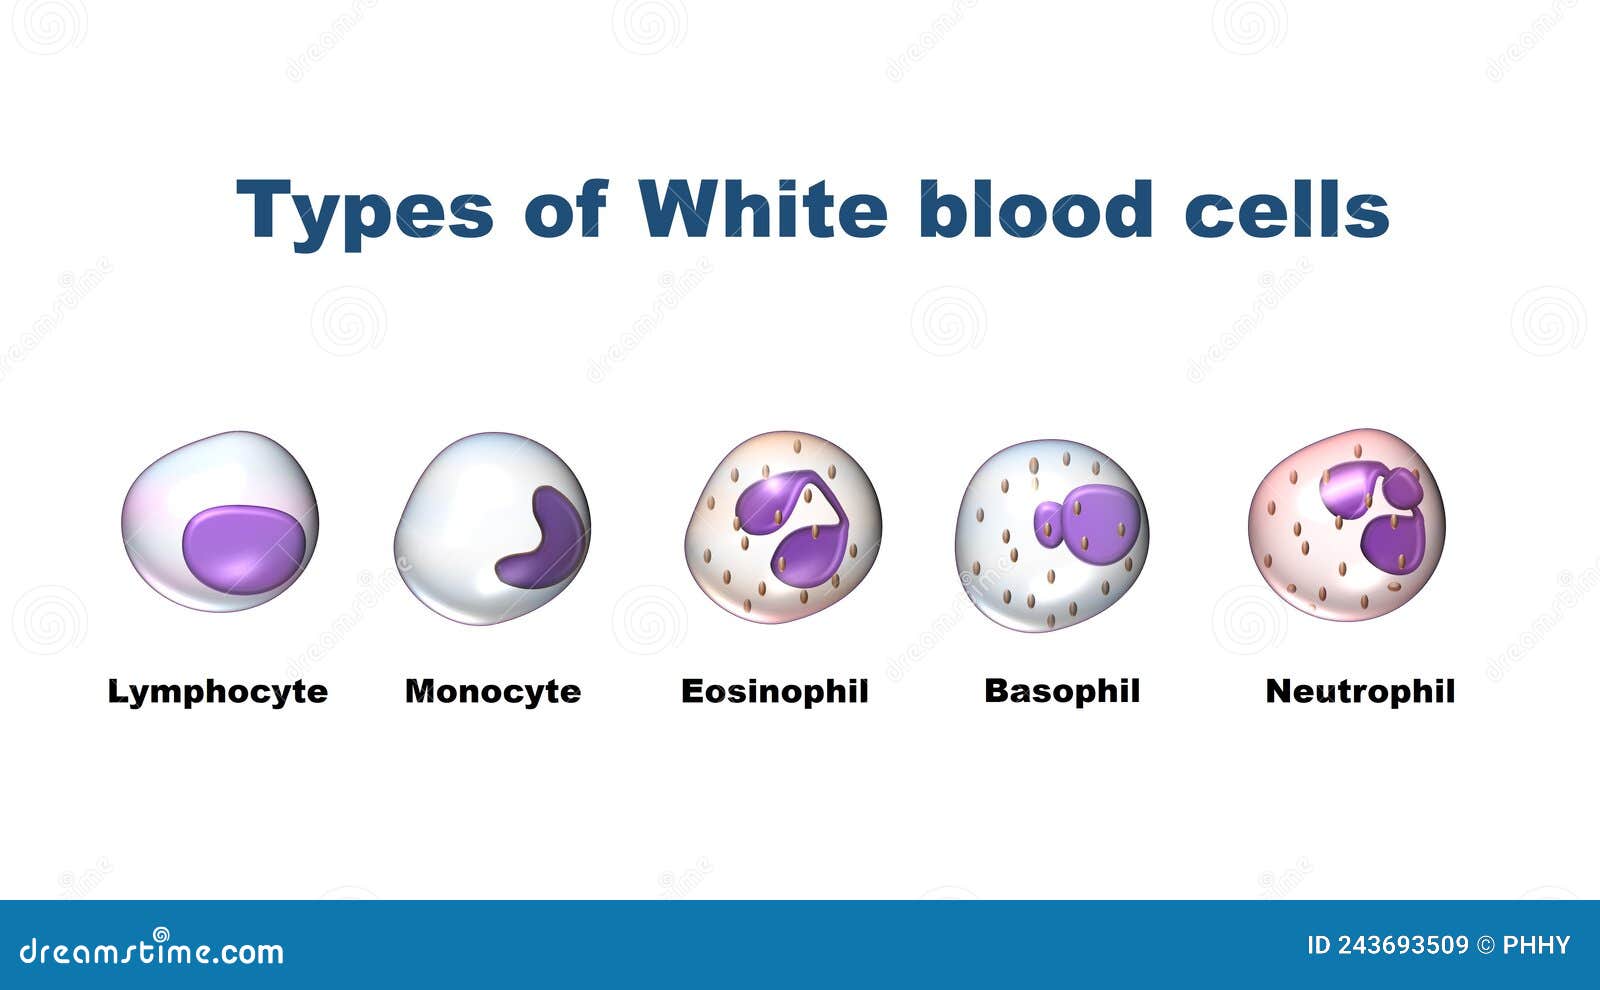 white blood cells, leukocytes types